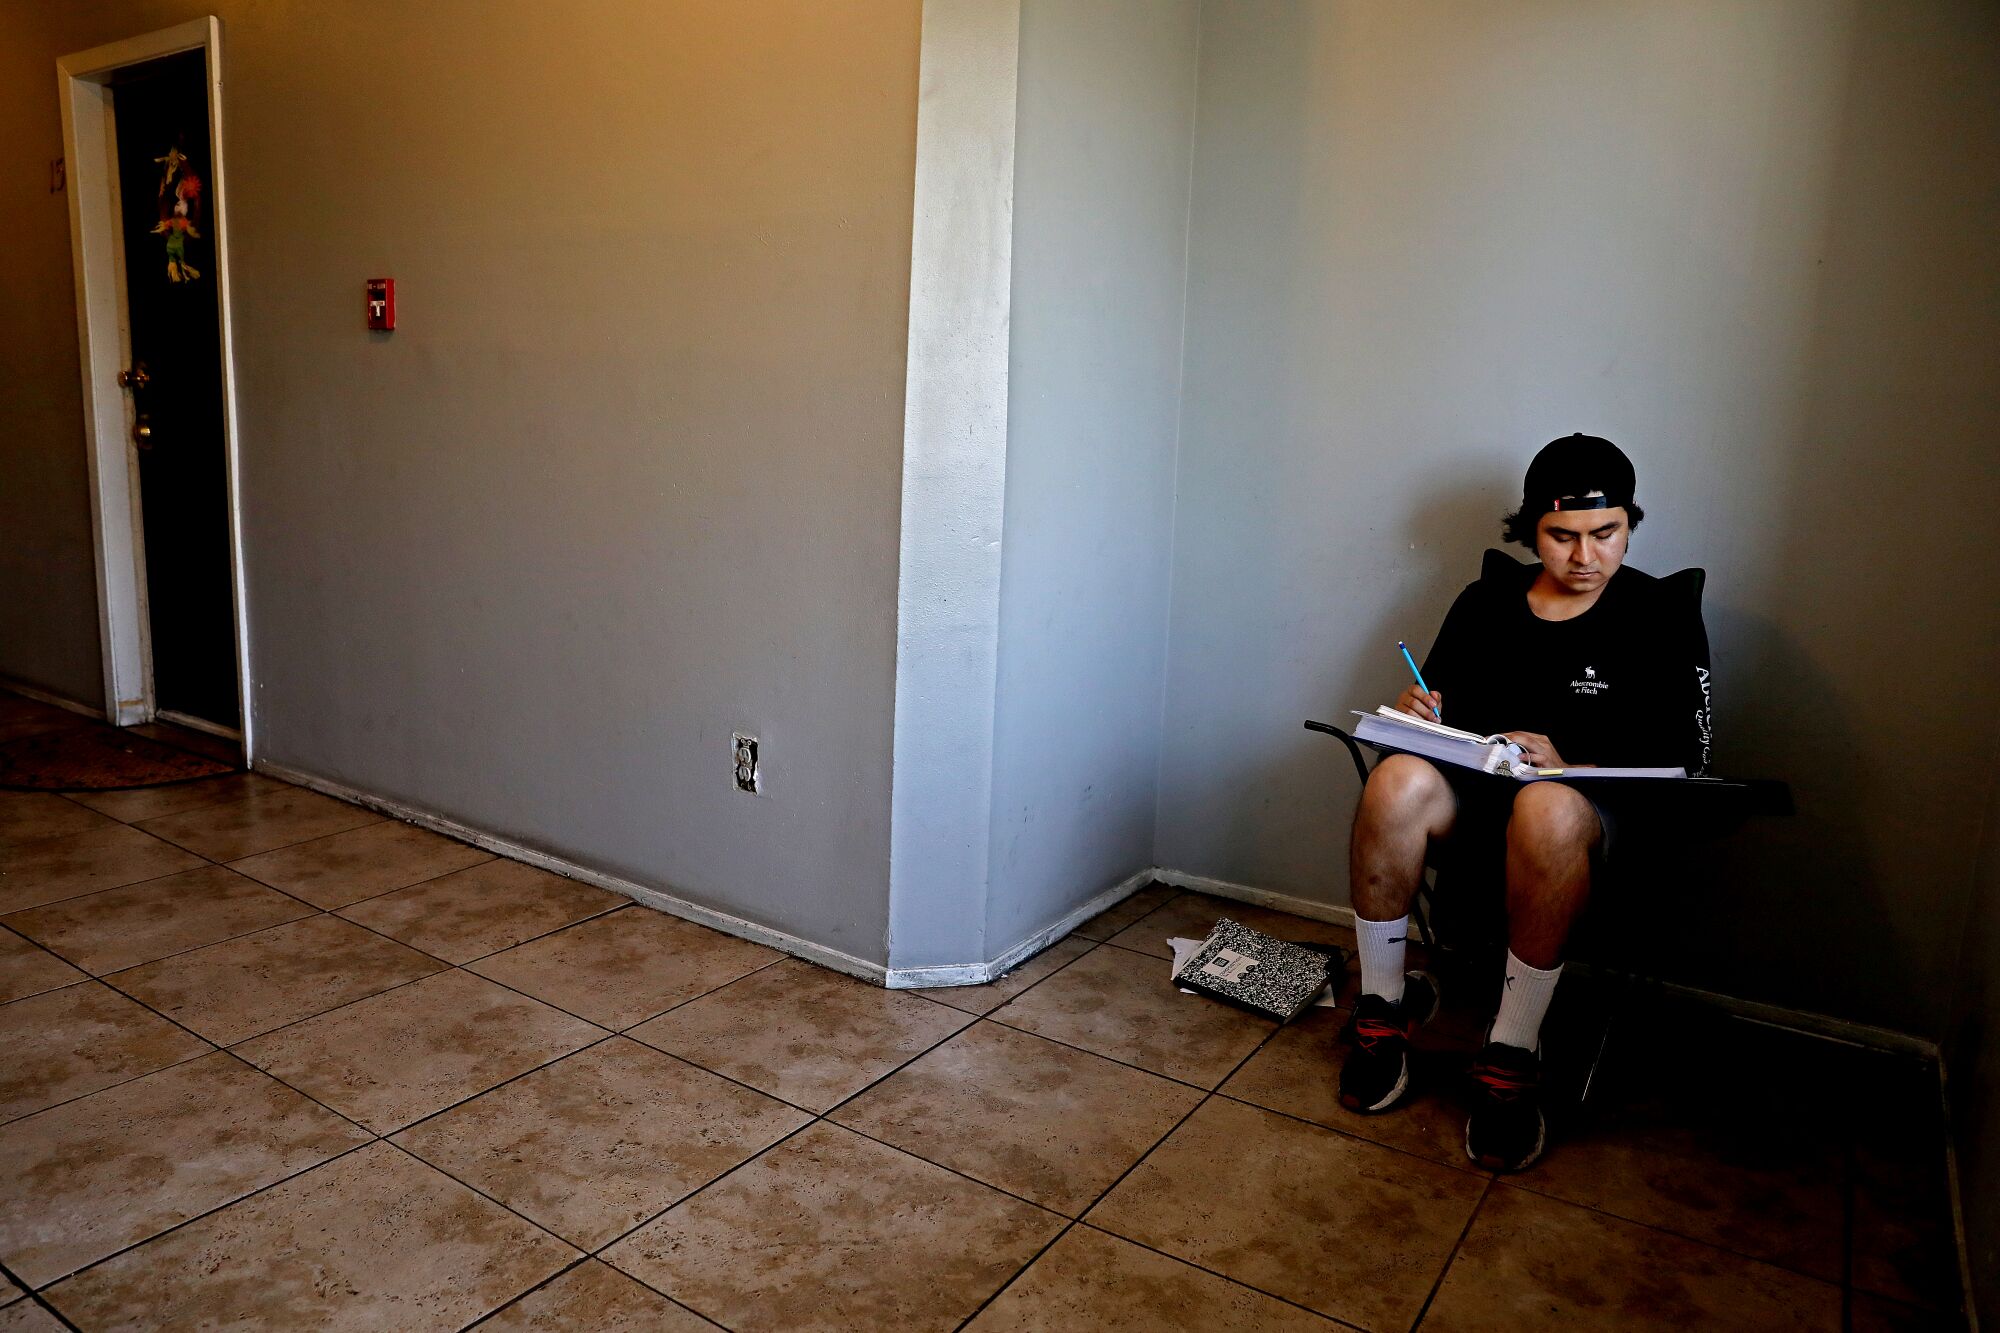 Jesse Iran Davila Garcia, 19, studies for his real estate exam in the hallway